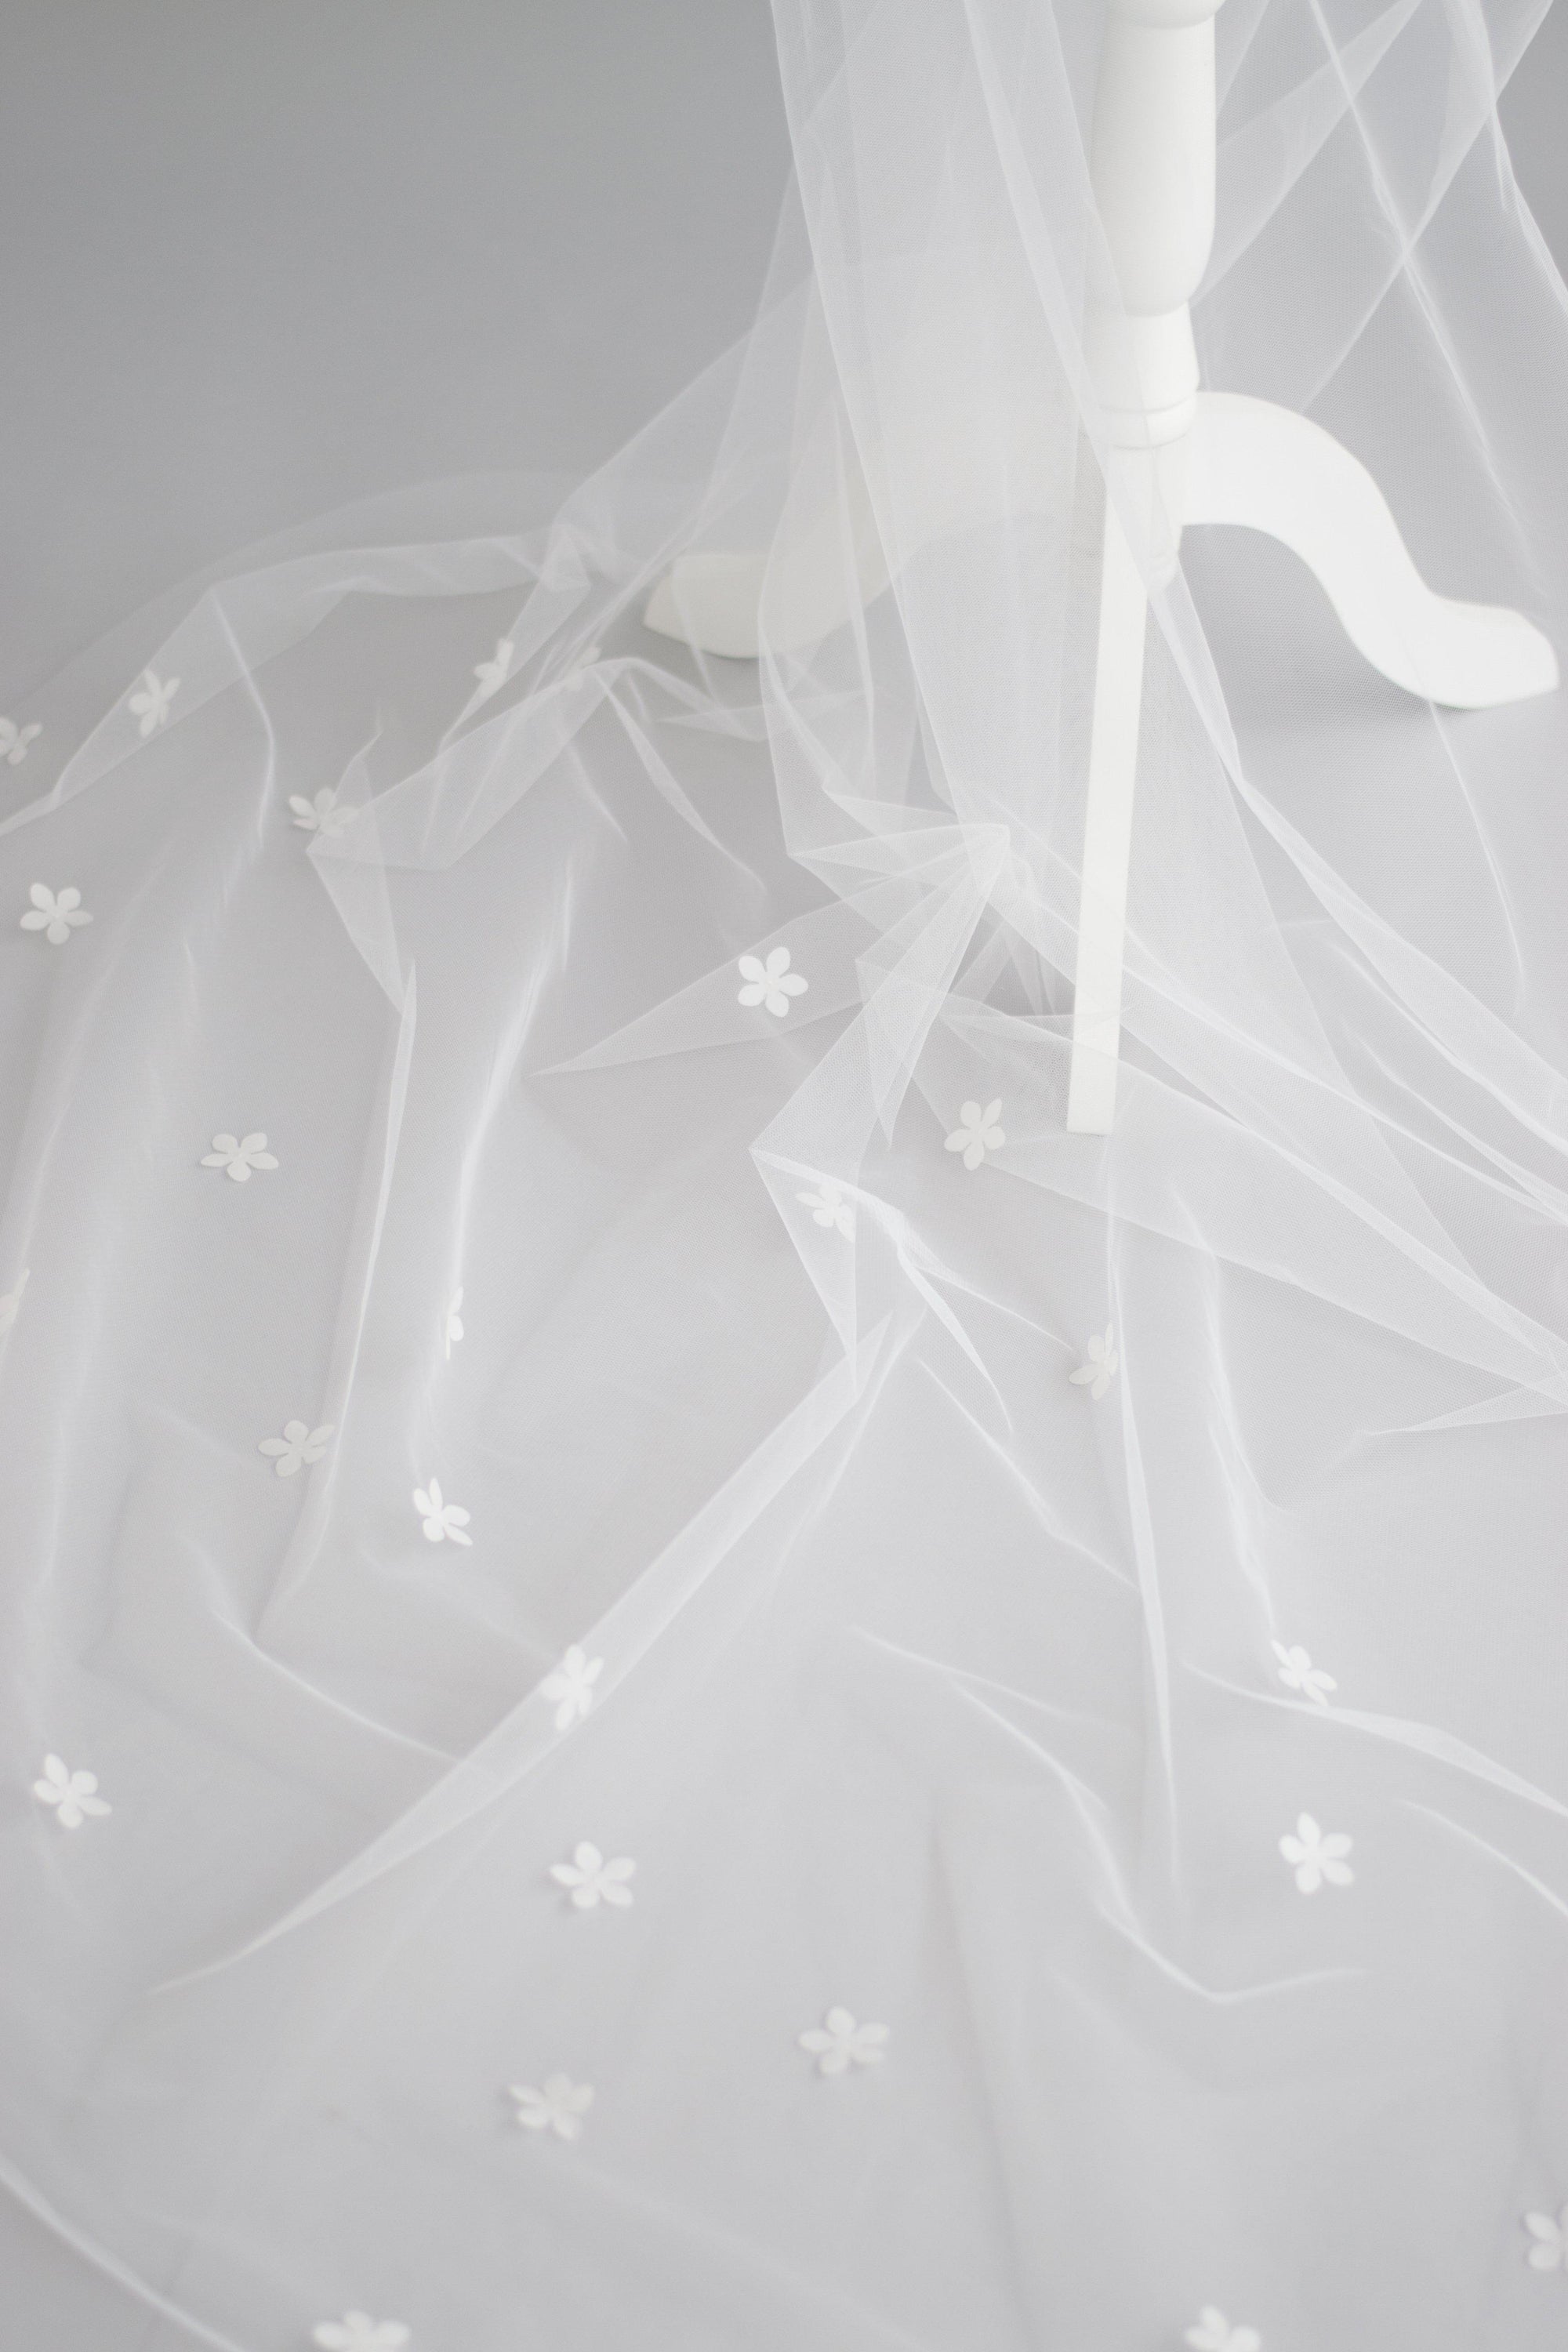 Our new silk flower wedding veil- Fiore